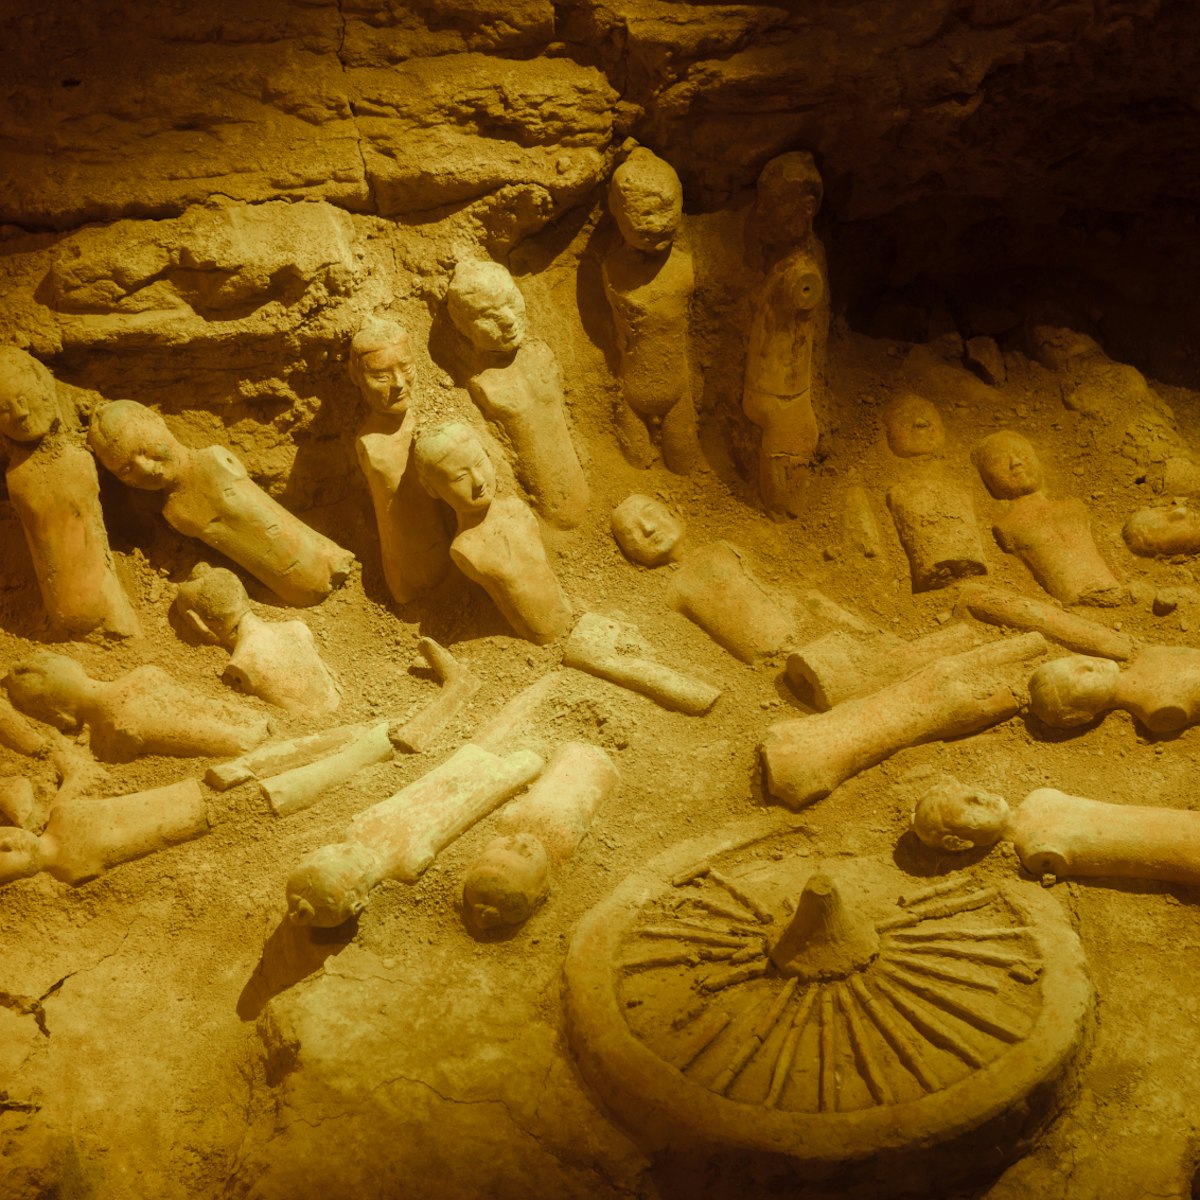 Terracotta figures at the Han Dynasty Tomb of Han Yang Ling, Xian, China.